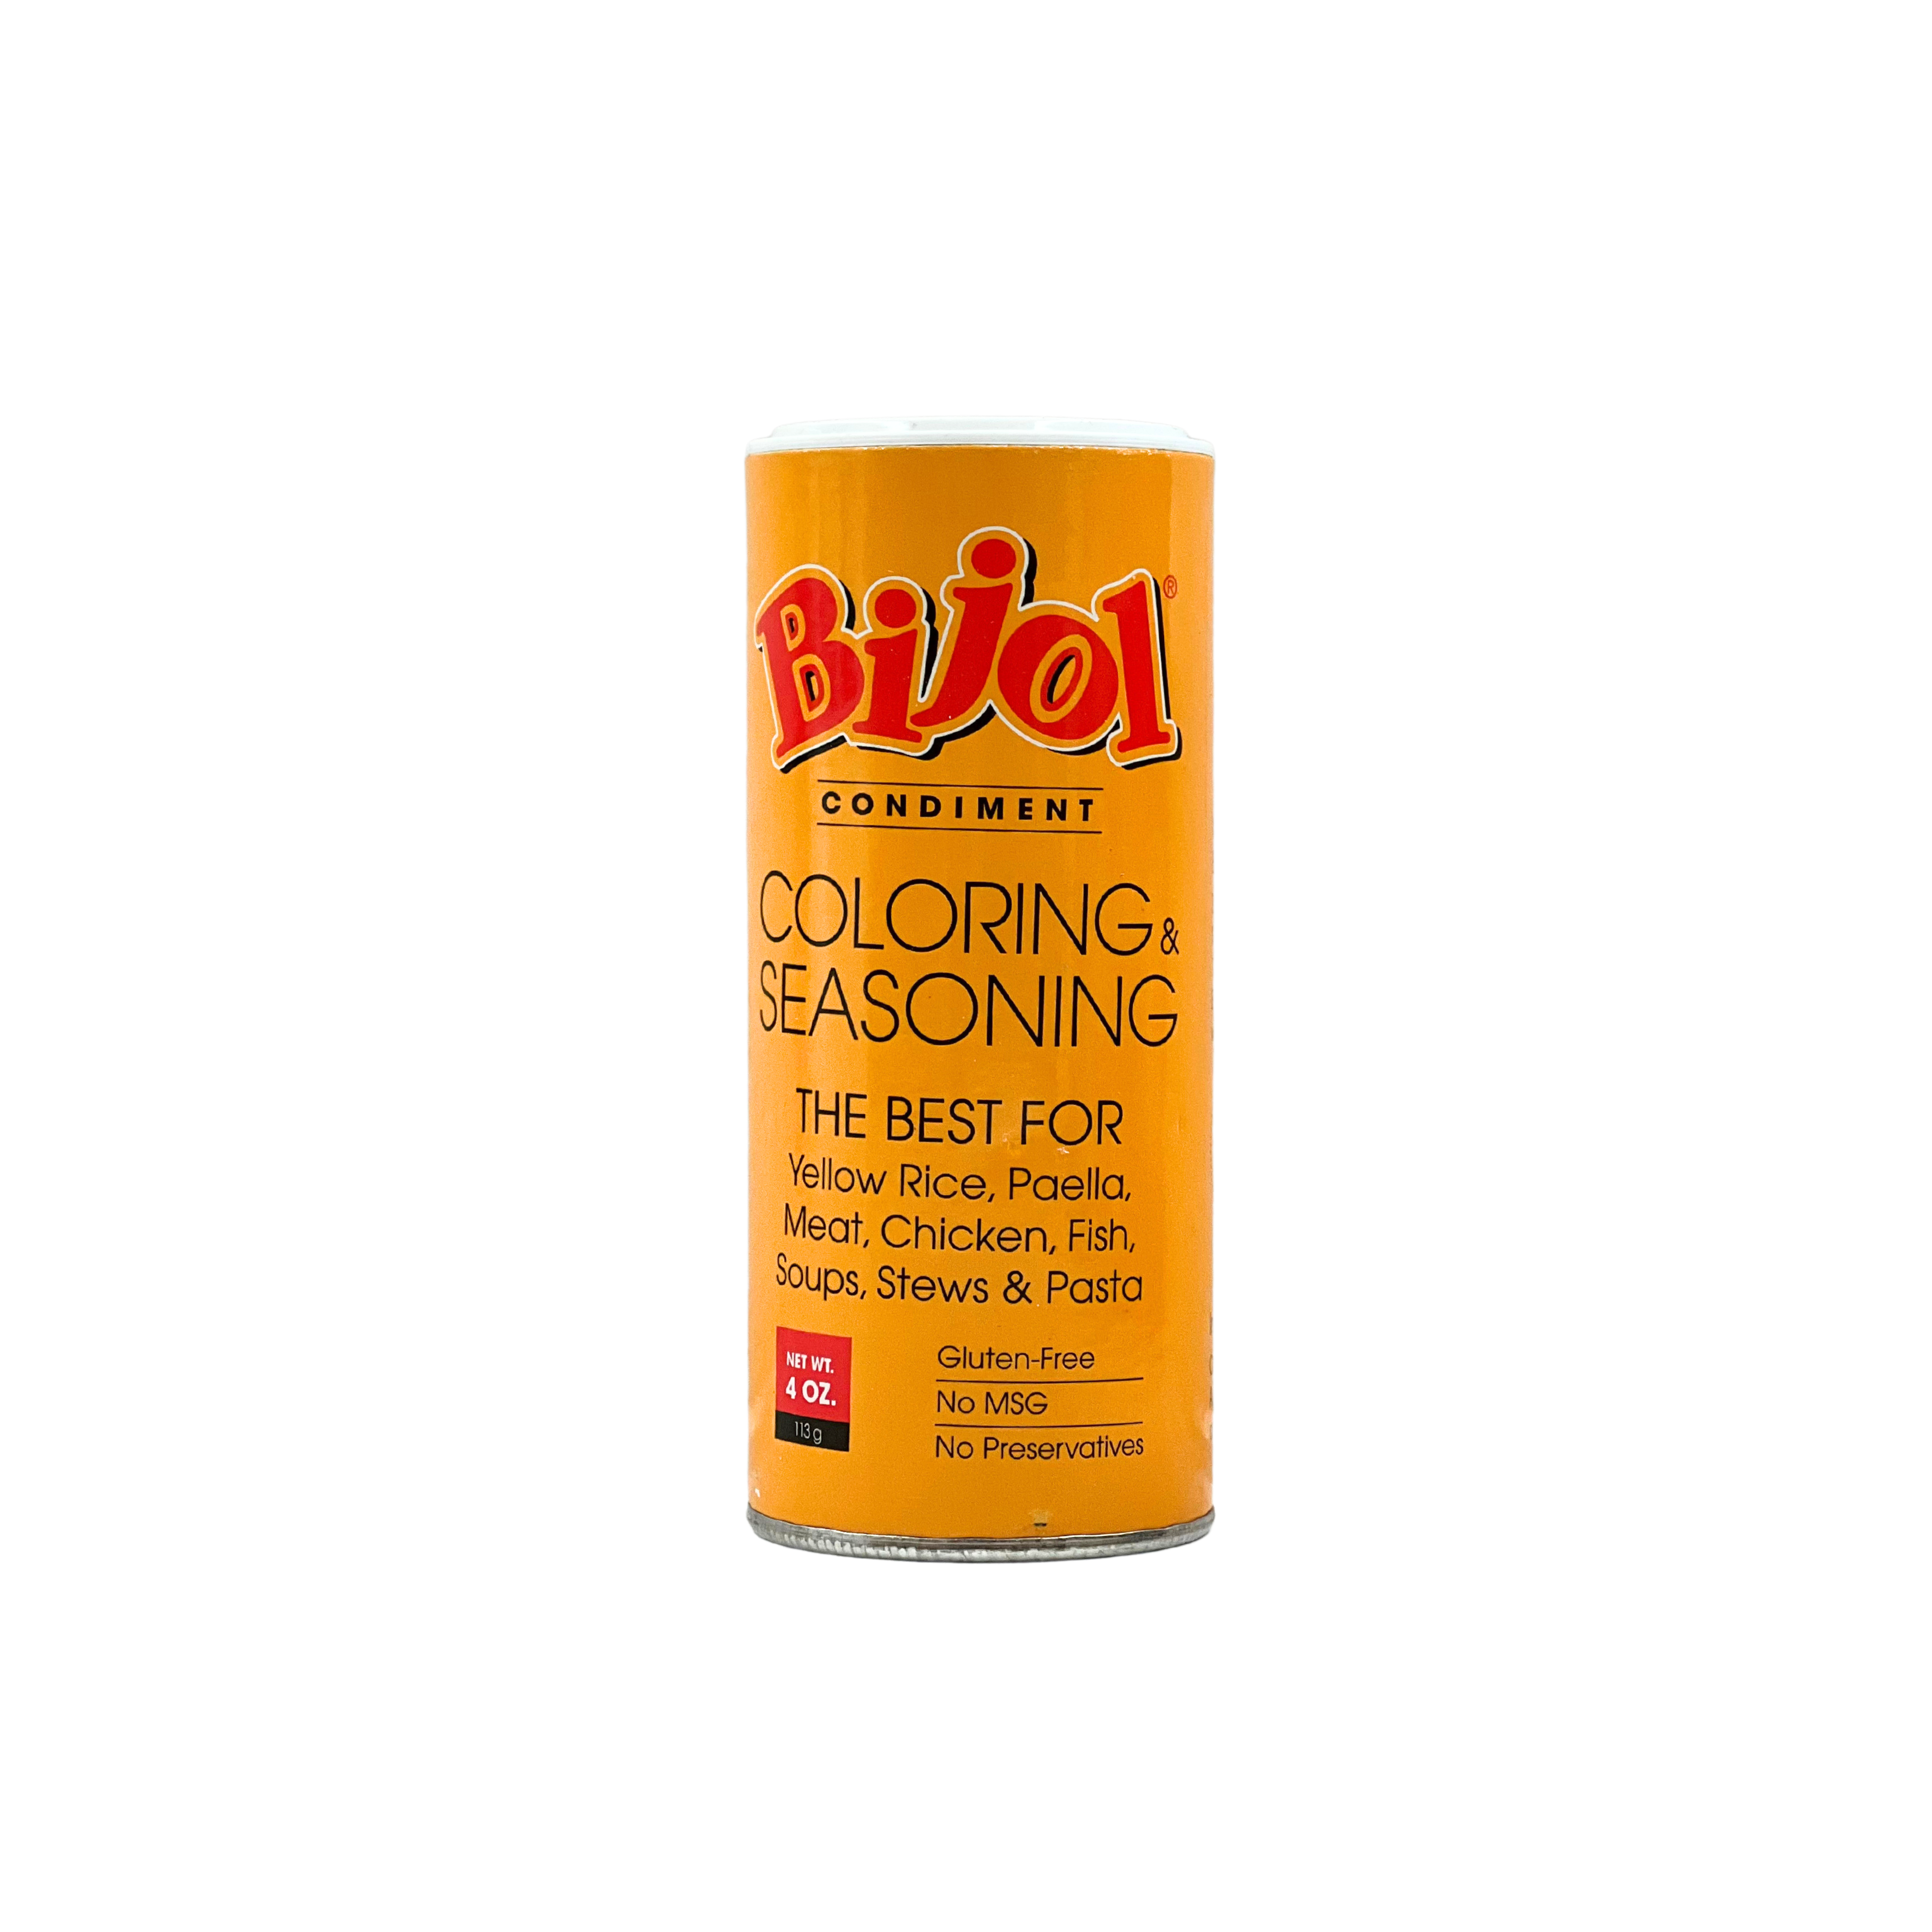 Bijol Condiment Coloring & Seasoning 113g